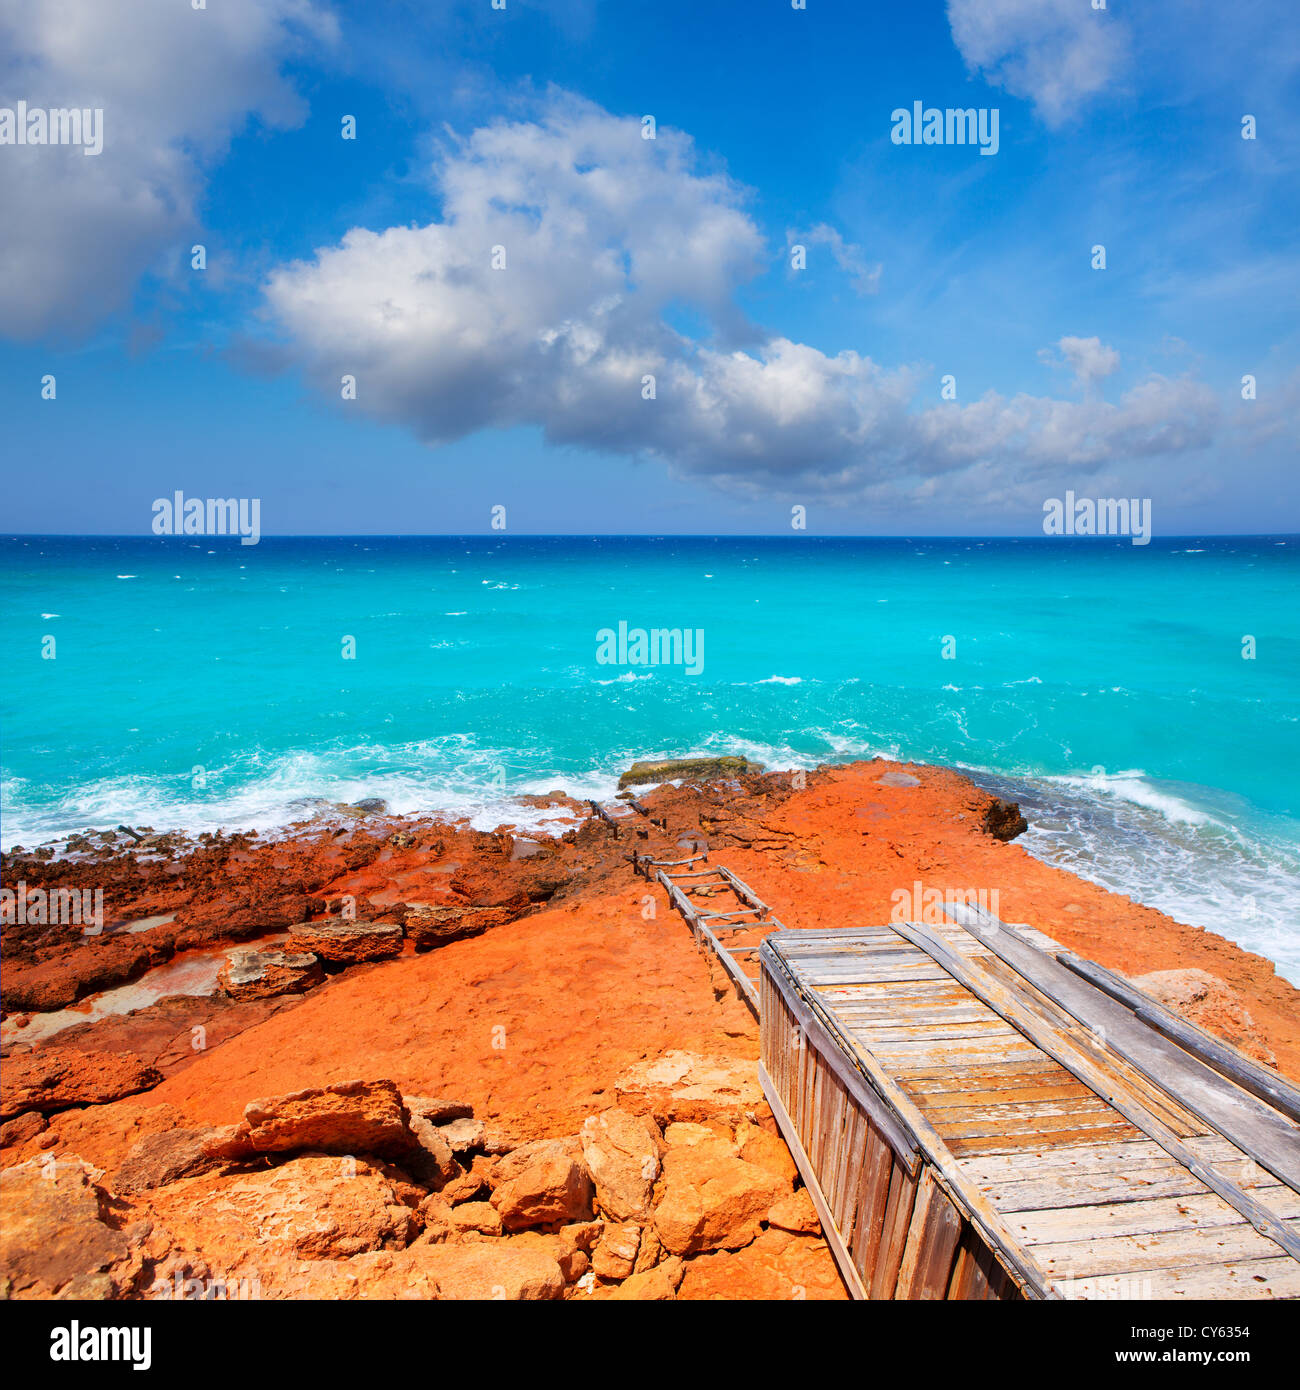 Cala Saona rocky coast with aqua turquoise rough Mediterranean sea Stock Photo